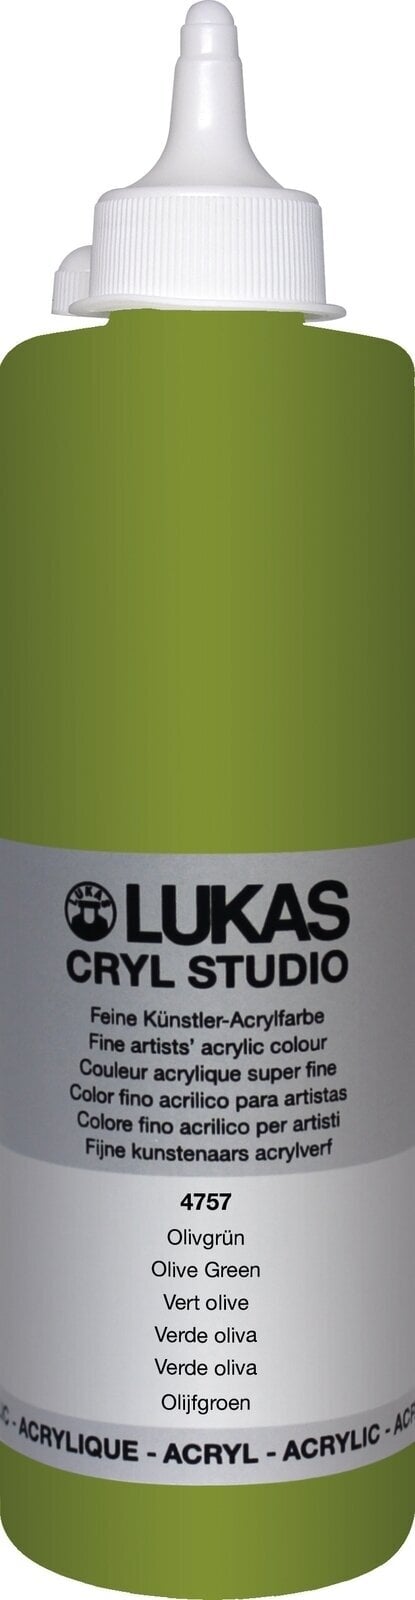 Peinture acrylique Lukas Cryl Studio Peinture acrylique 500 ml Olive Green